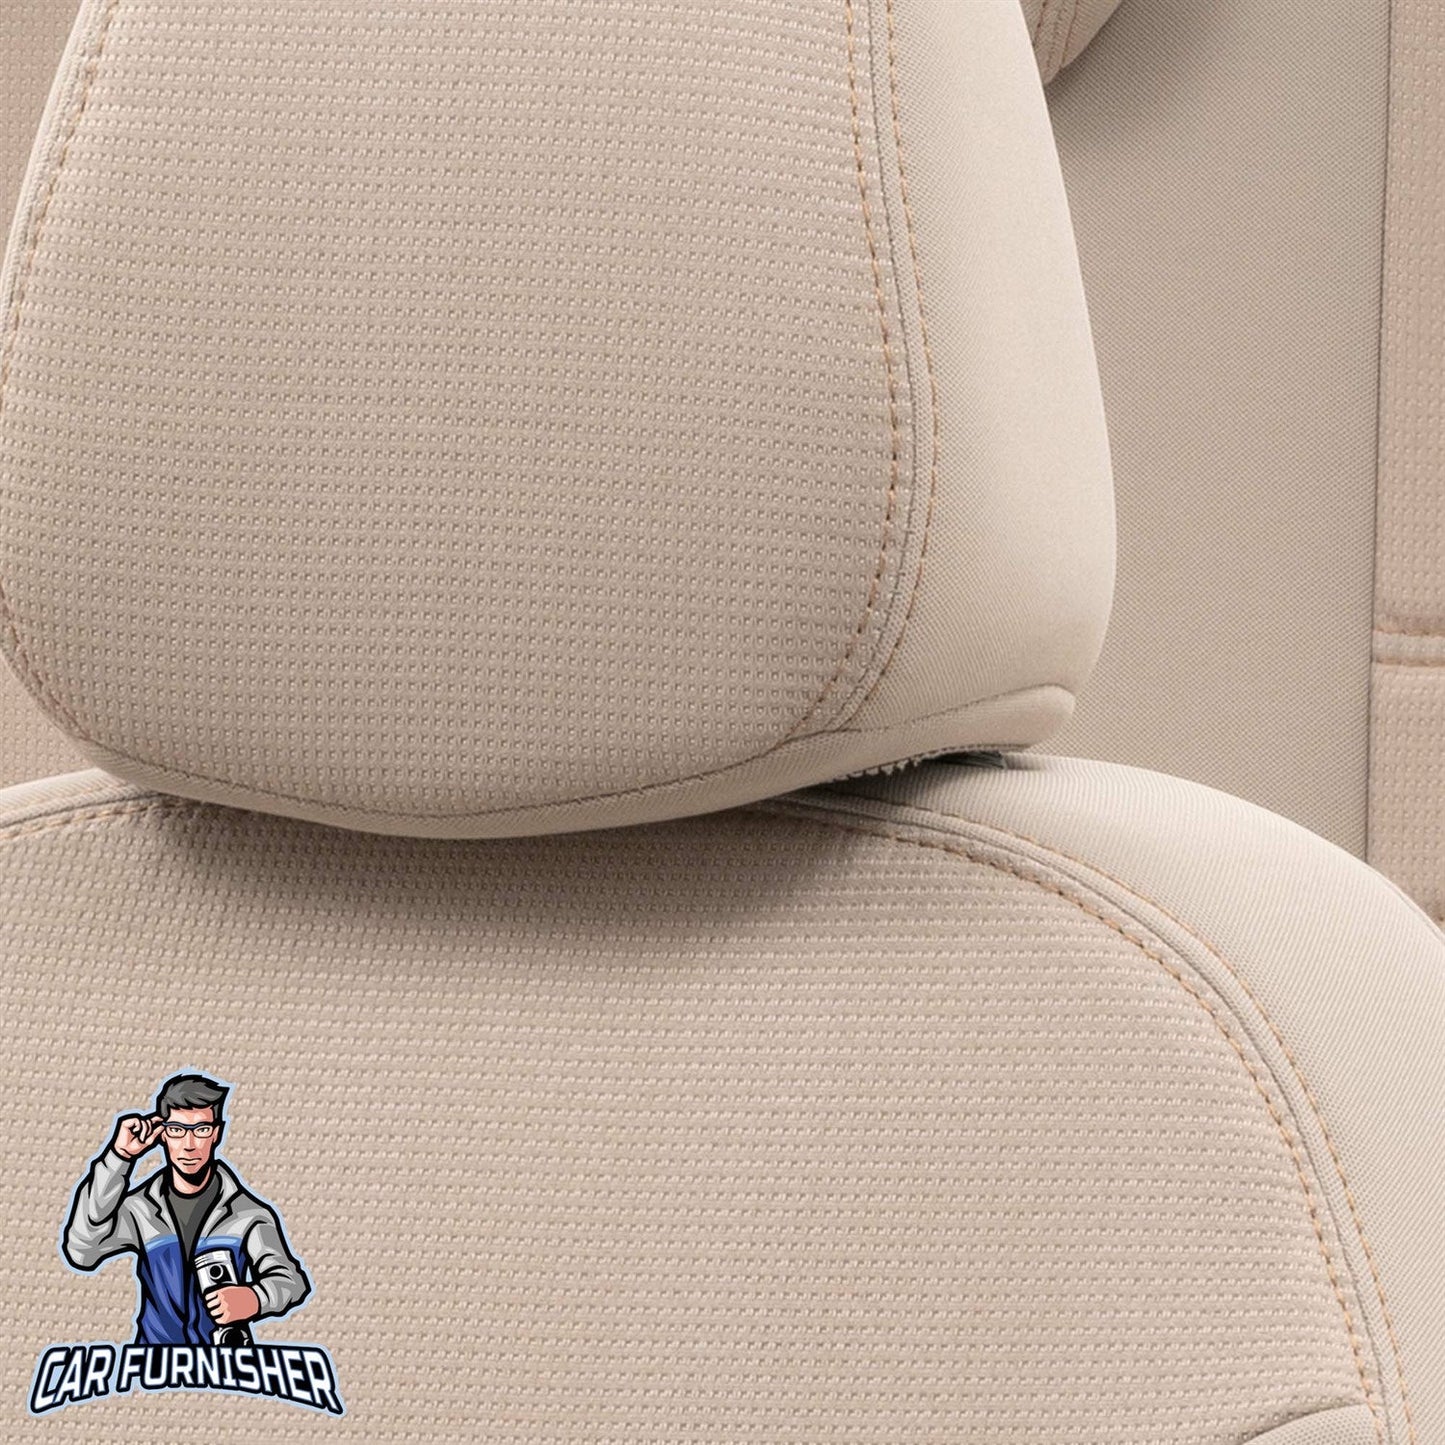 Mitsubishi Canter Seat Covers Original Jacquard Design Beige Jacquard Fabric